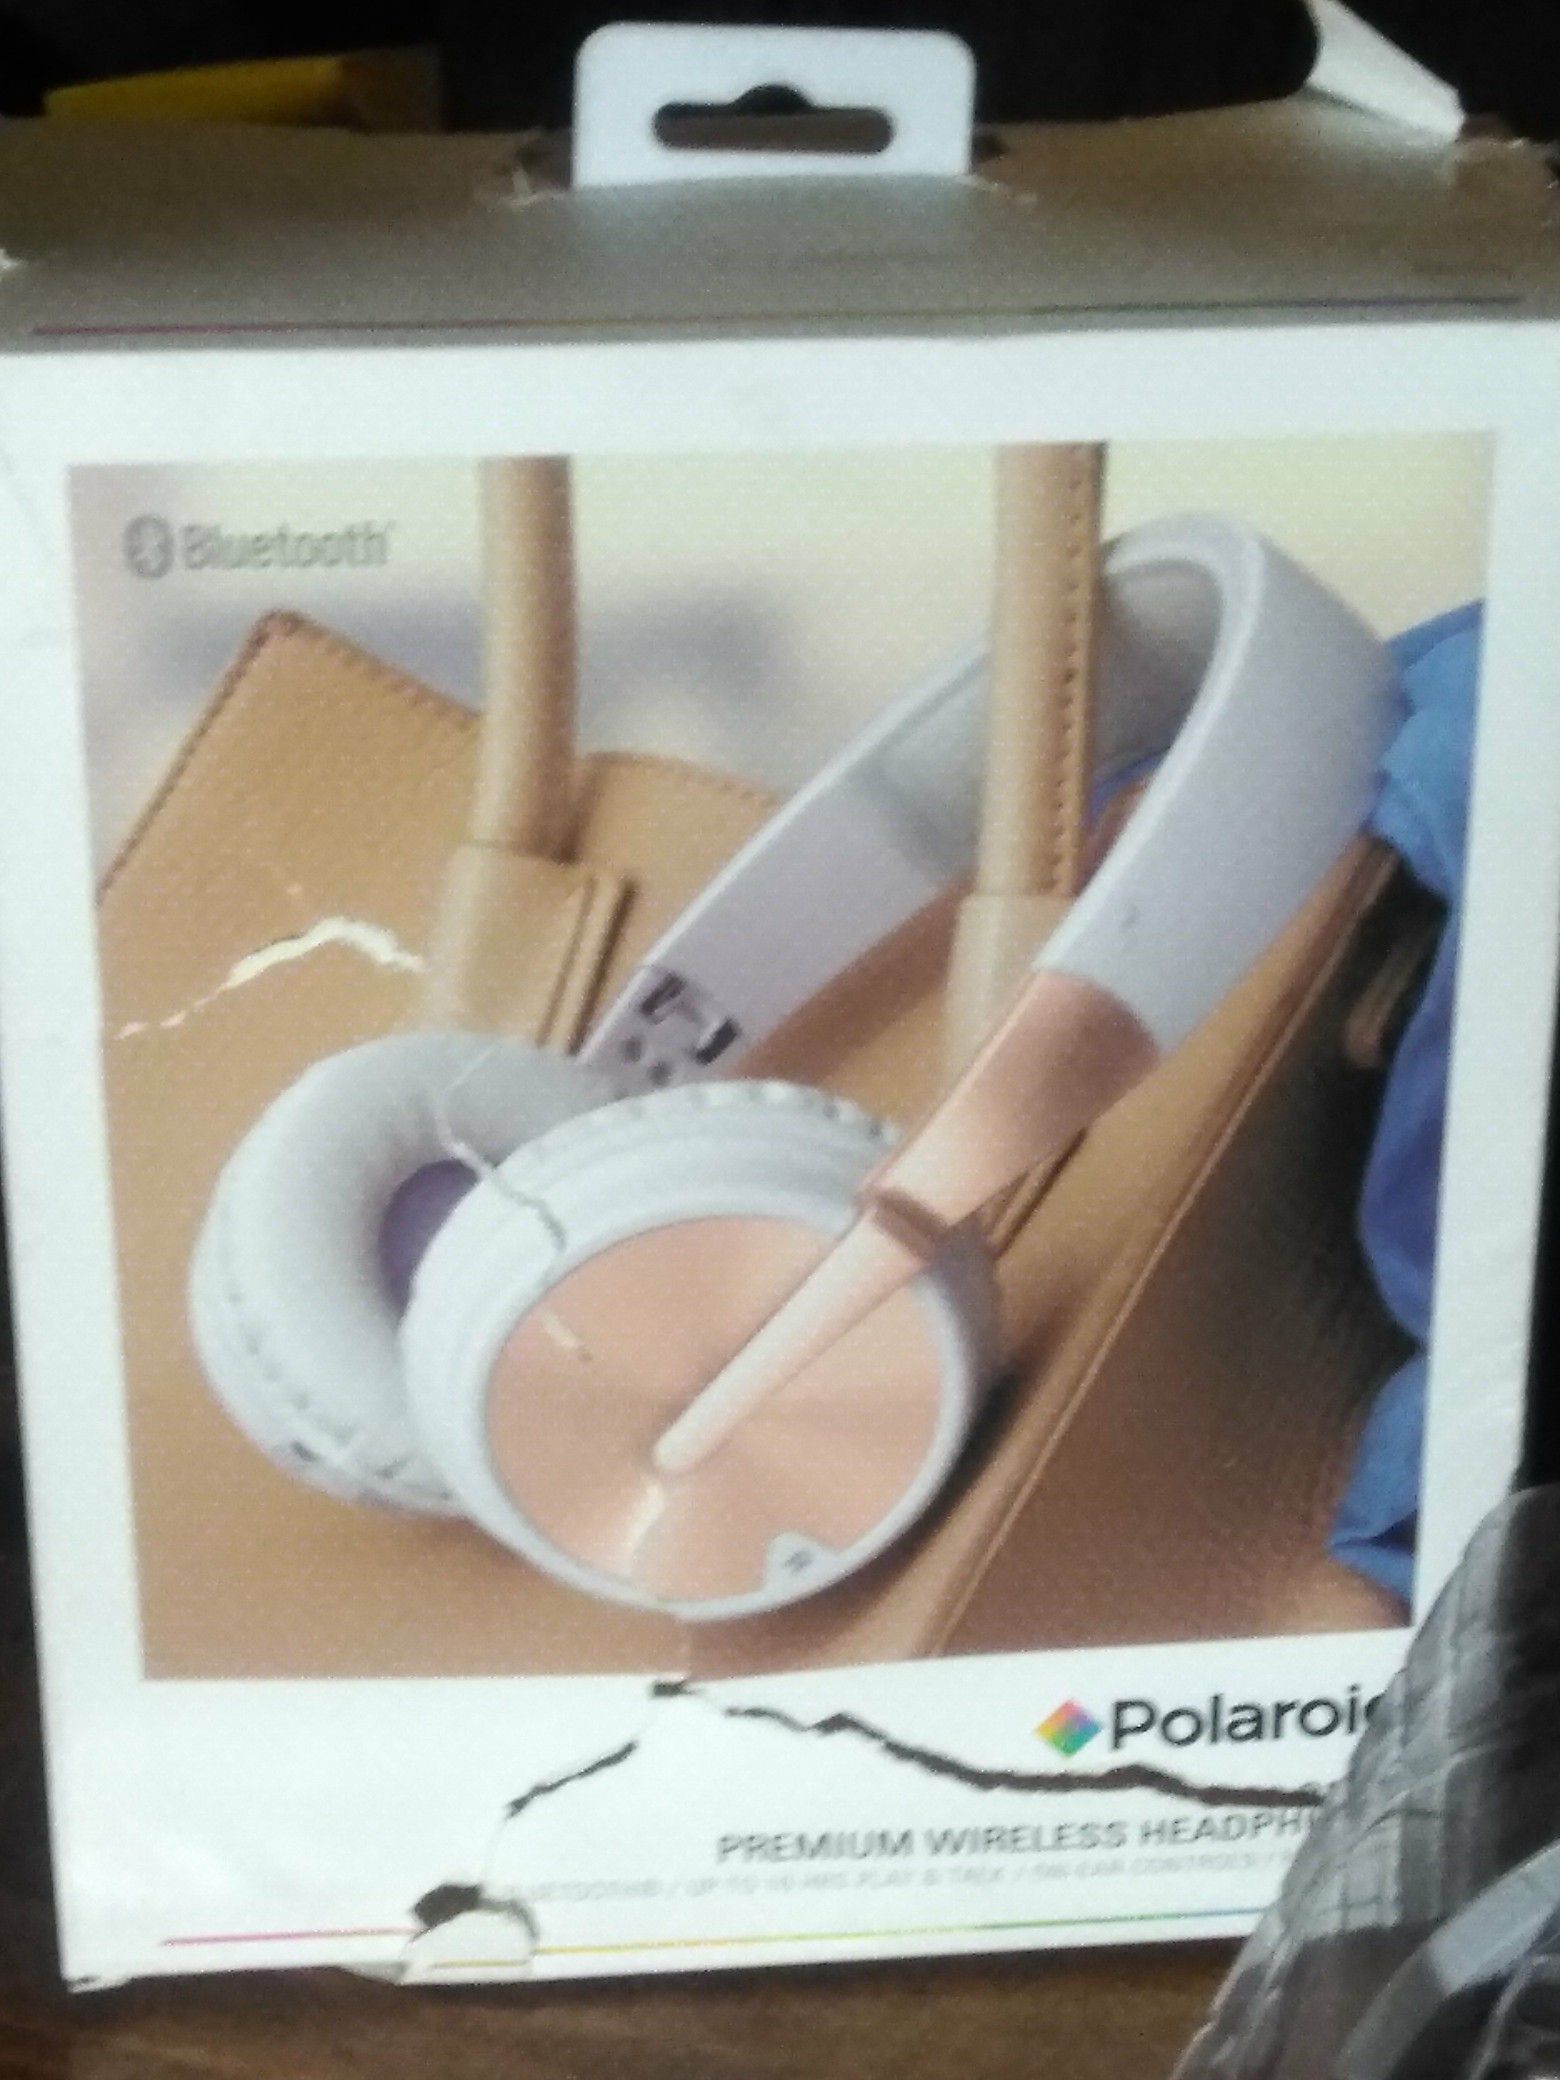 Polaroid Premium wireless Bluetooth headphones